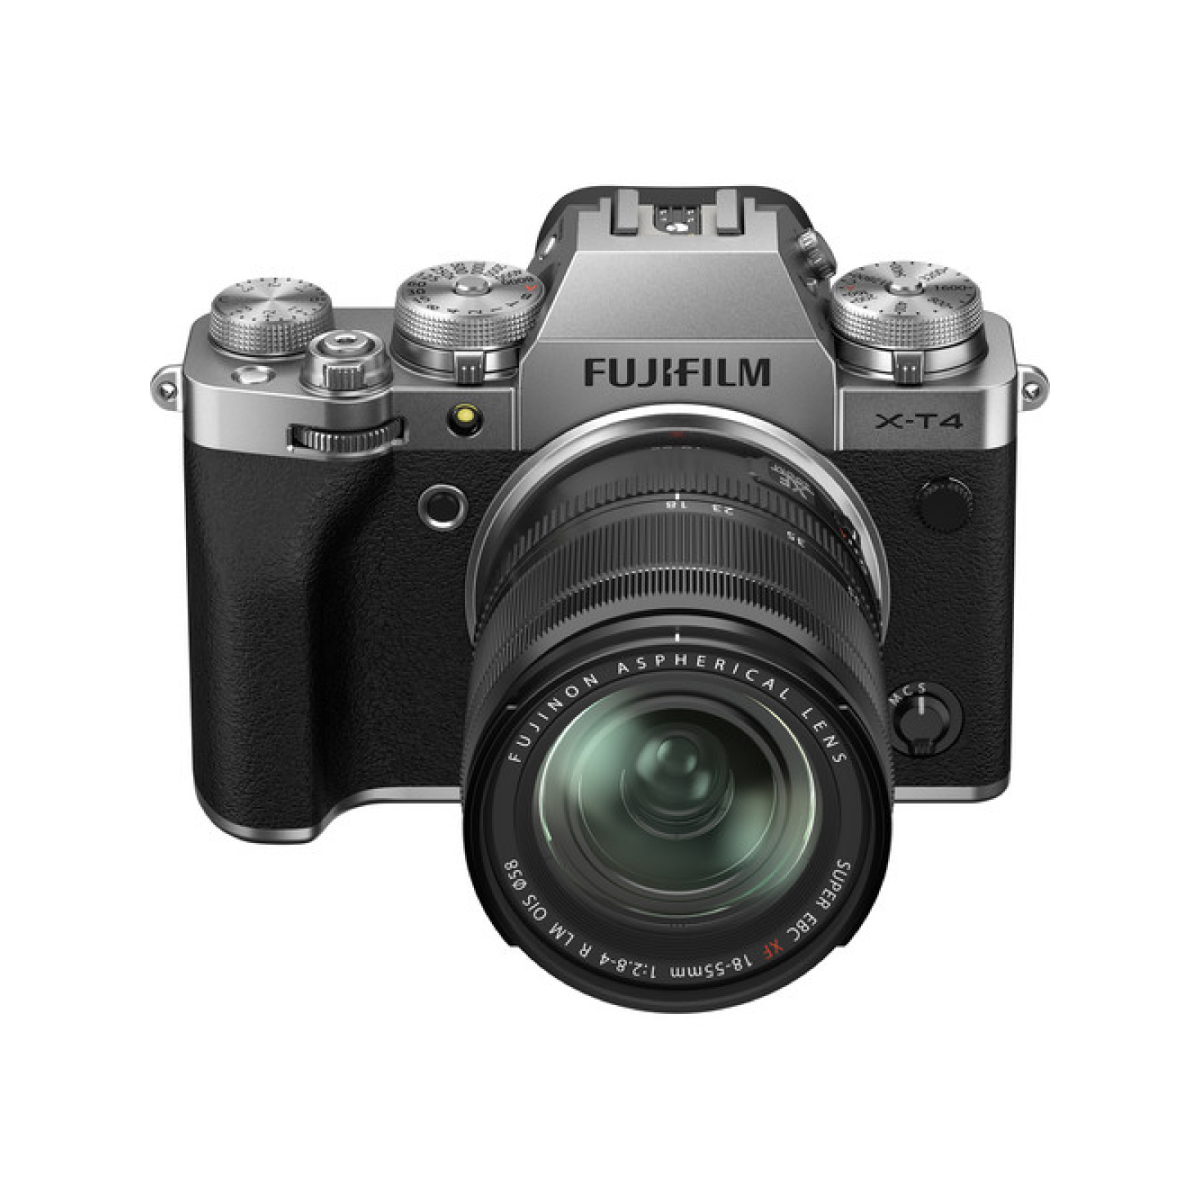 Fujifilm X-T4 26MP Mirrorless Camera Body with XF18-55mm Lens – Silver (2)